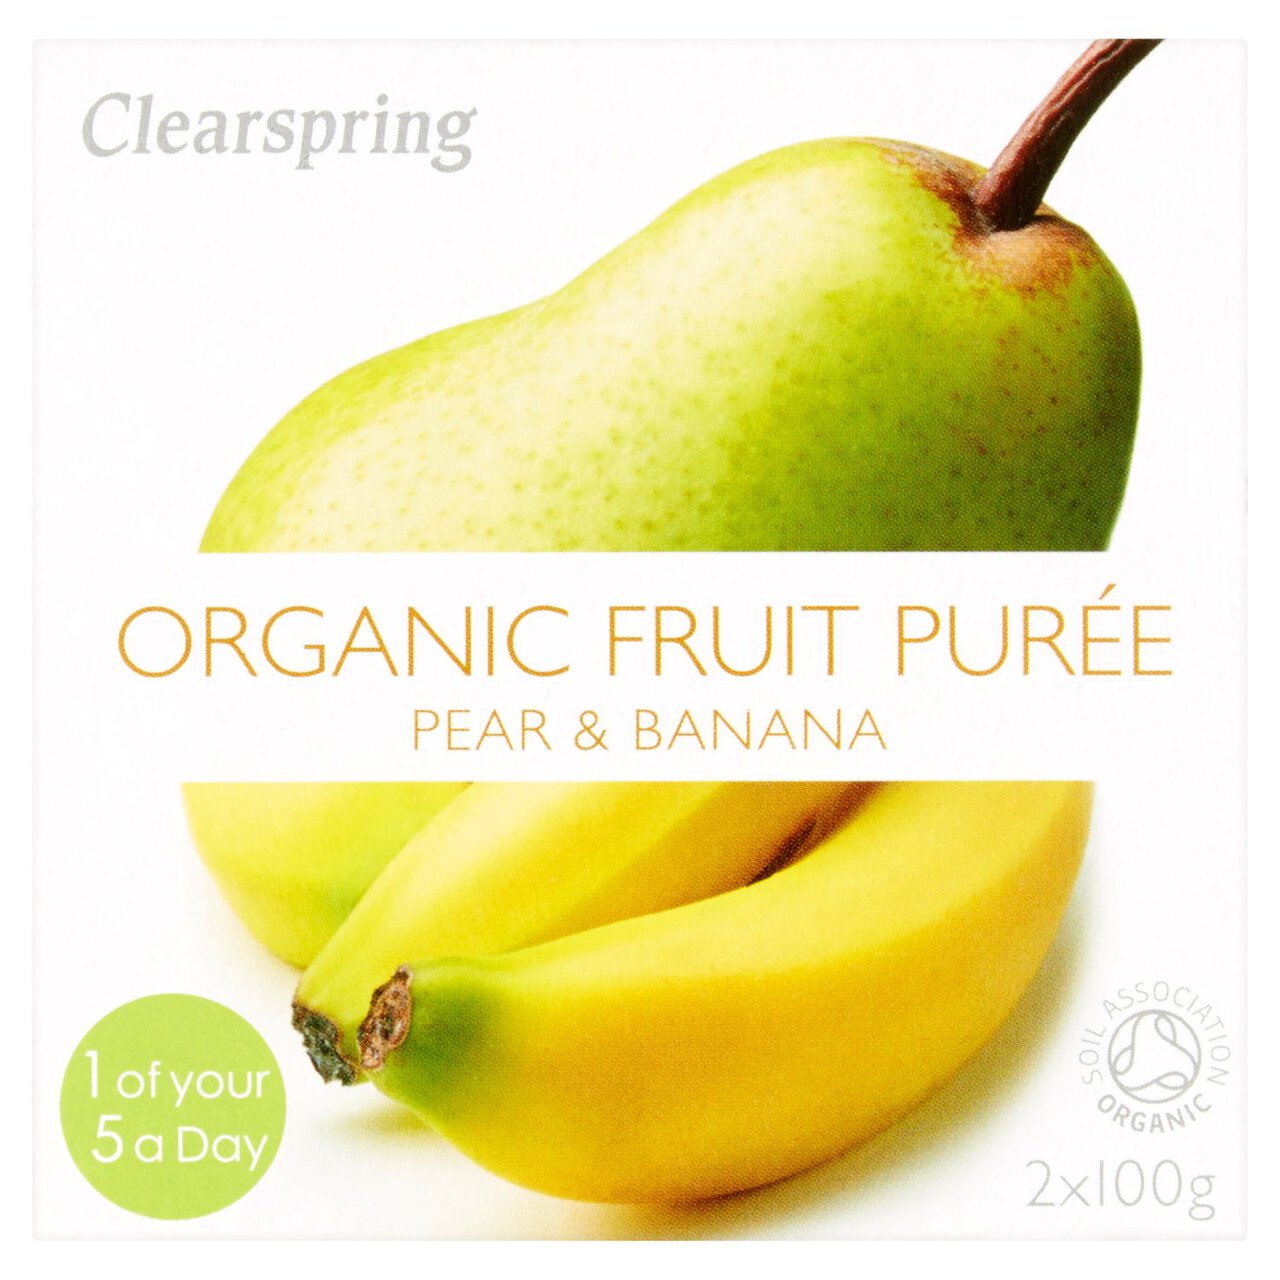 Clearspring Organic Pear & Banana Puree 2 x 100g